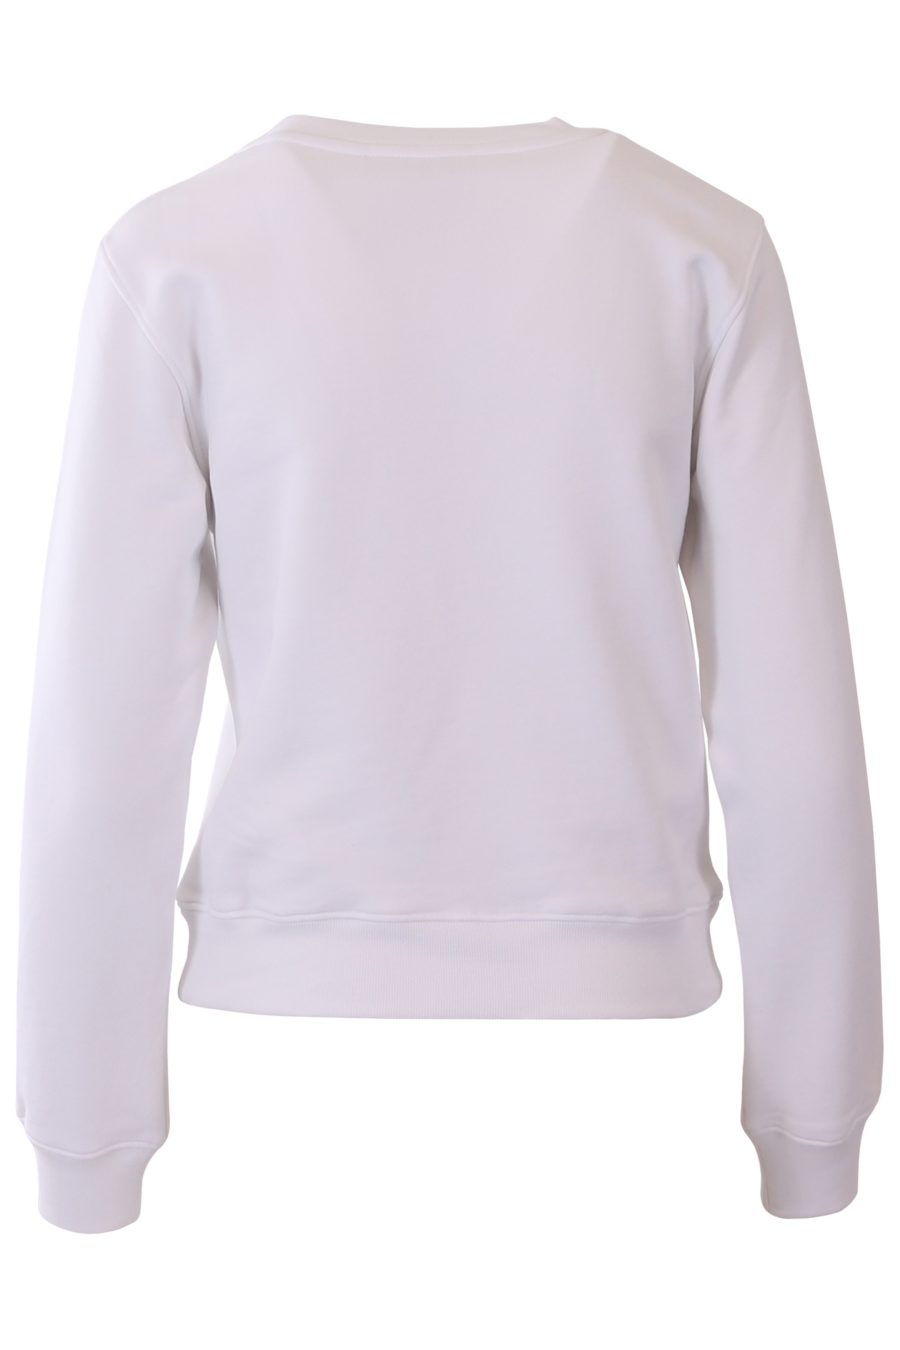 Moschino Couture white sweatshirt with large logo - 0d0a3496e76eacfa9f449c69d07e31507bf6f538